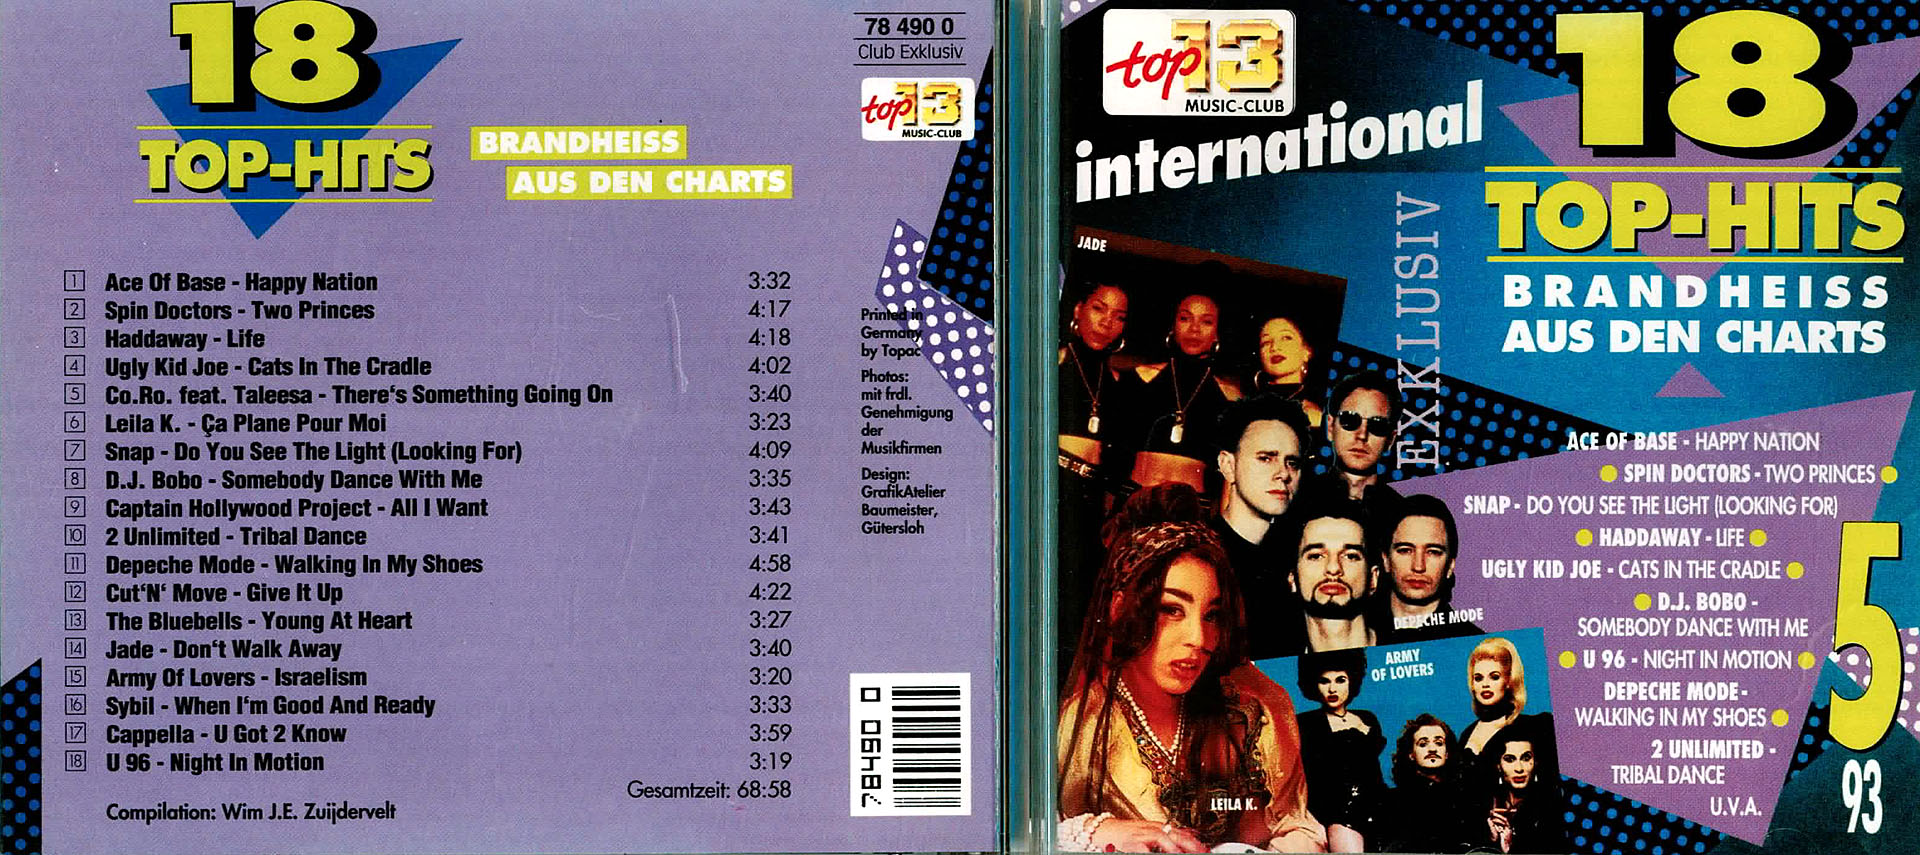 18 Top Hits aus den Charts 5/93 - Ace Of Base / D.J. Bobo / U96 / Depeche Mode u.v.a.m